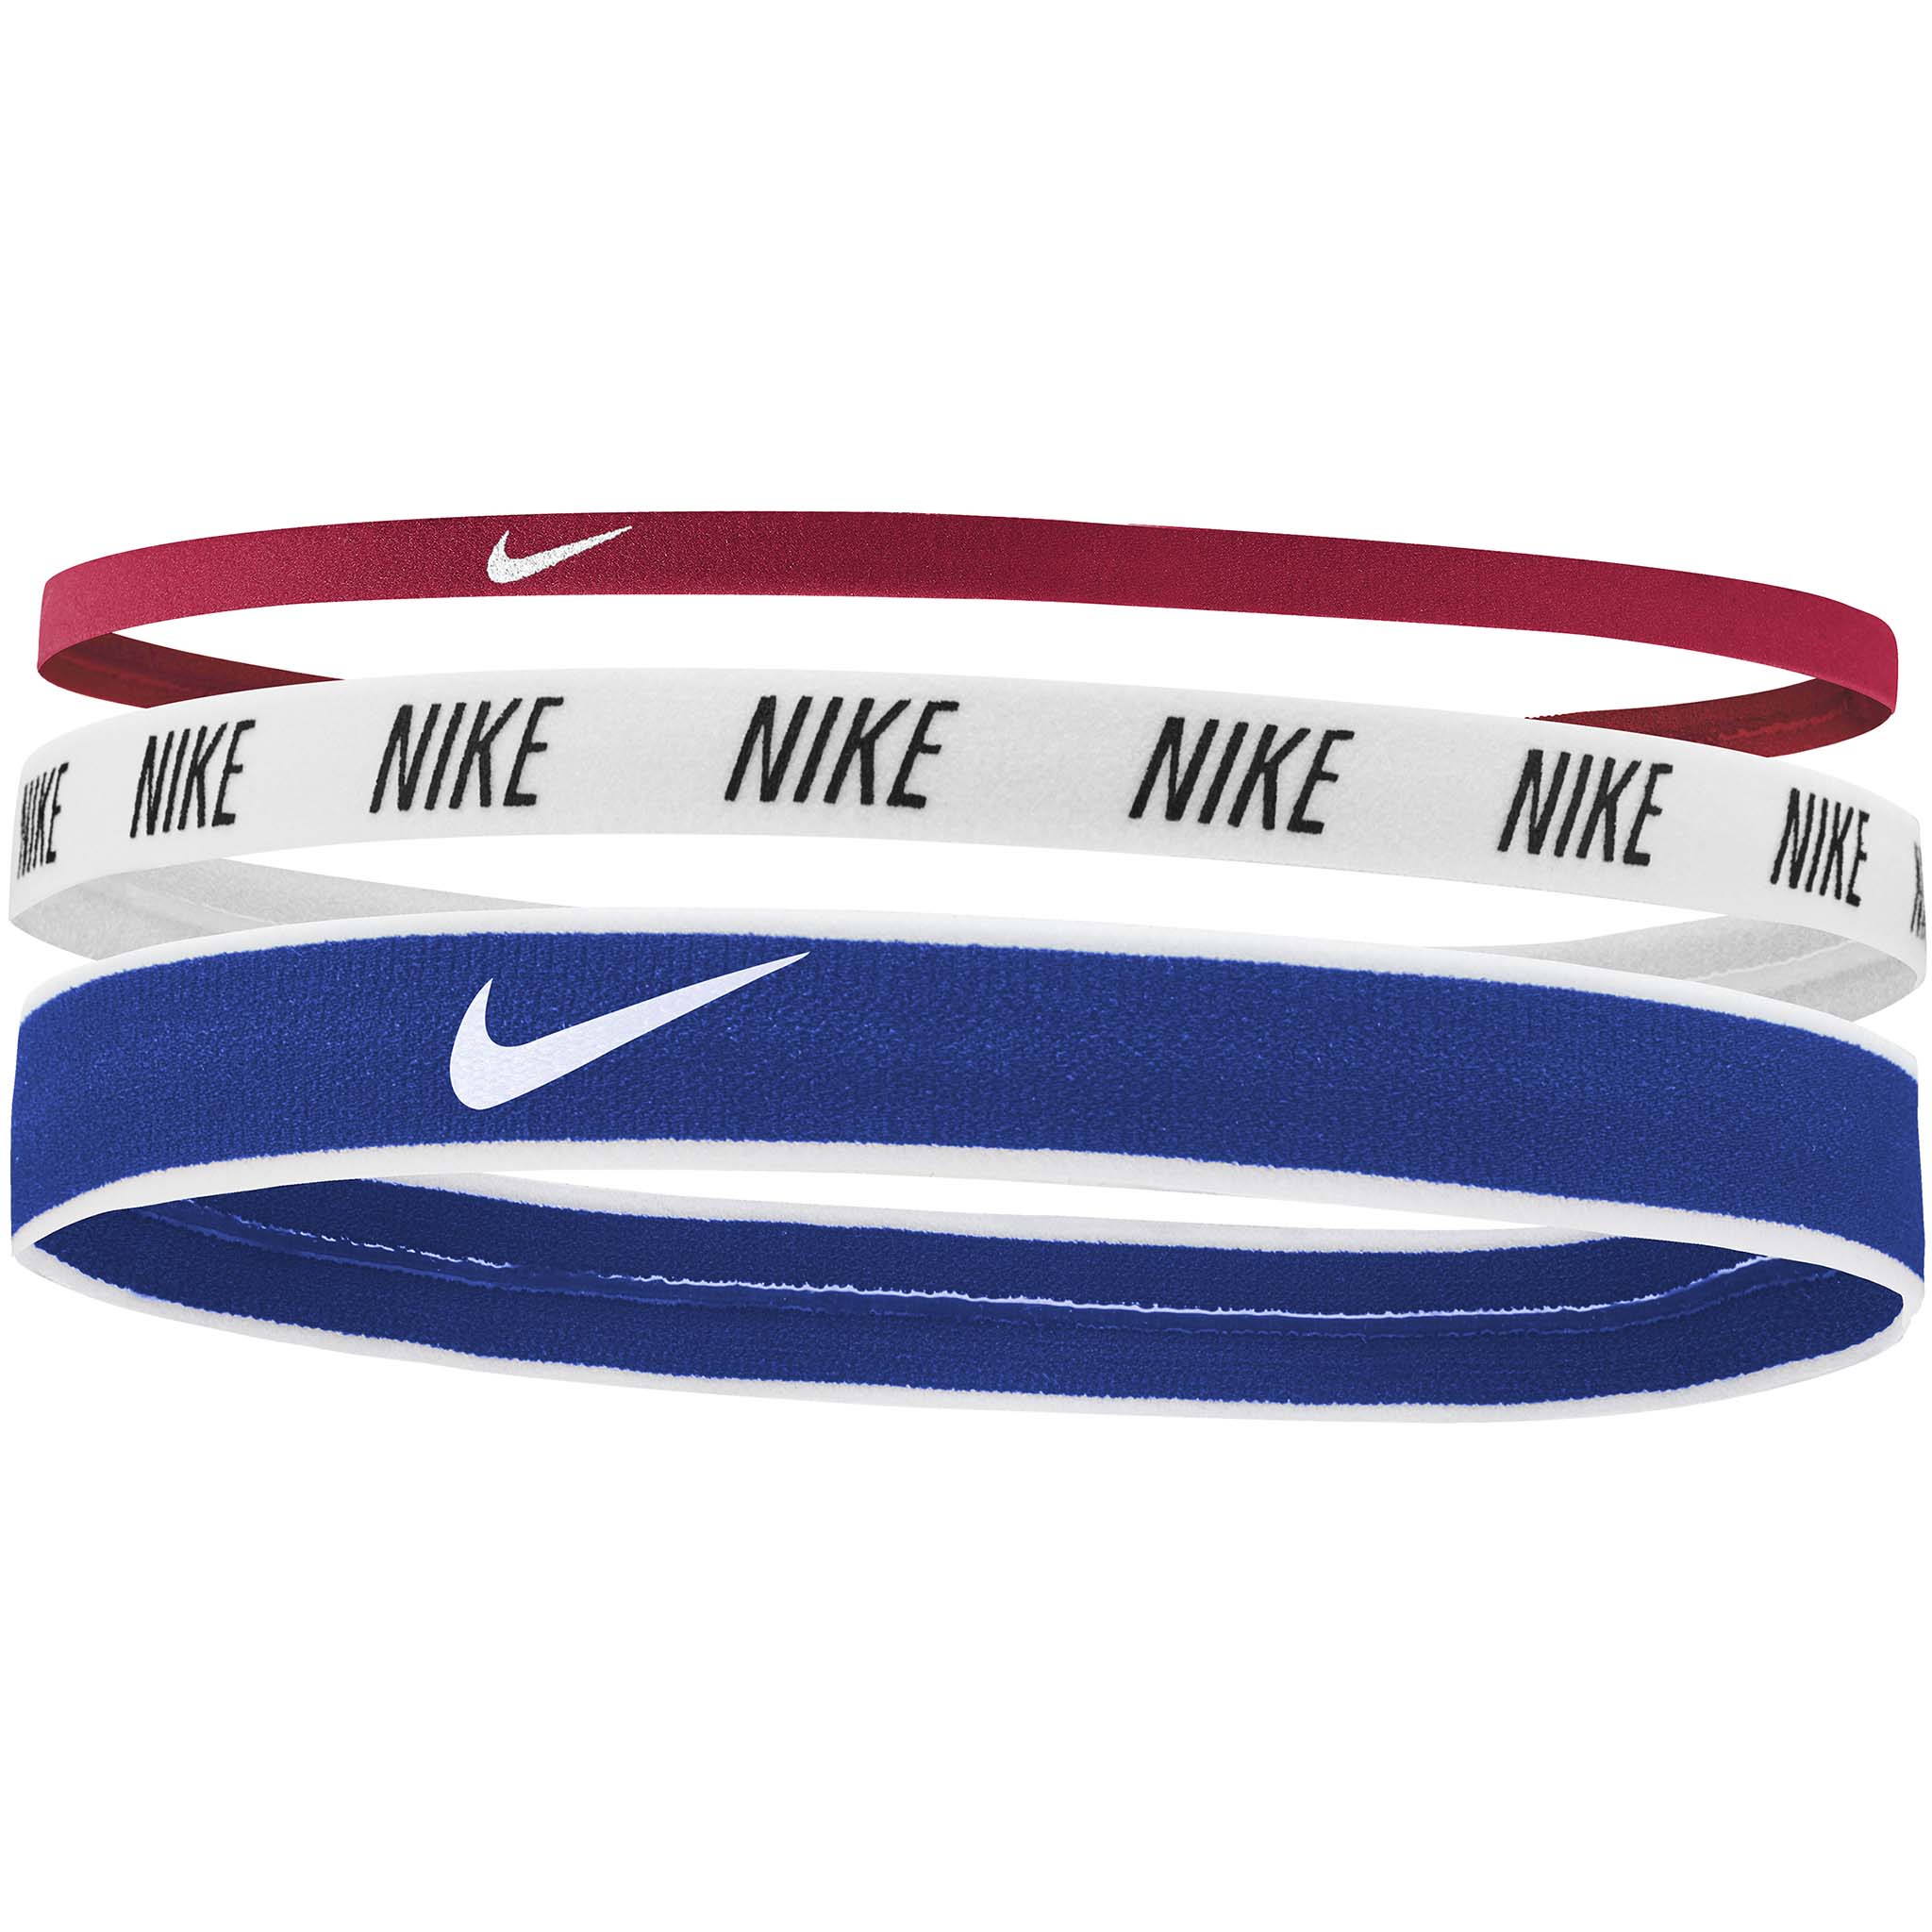 Nike Metallic Hairbands Headbands 3Pk Youth Kids Red/Pink/Photo Blue